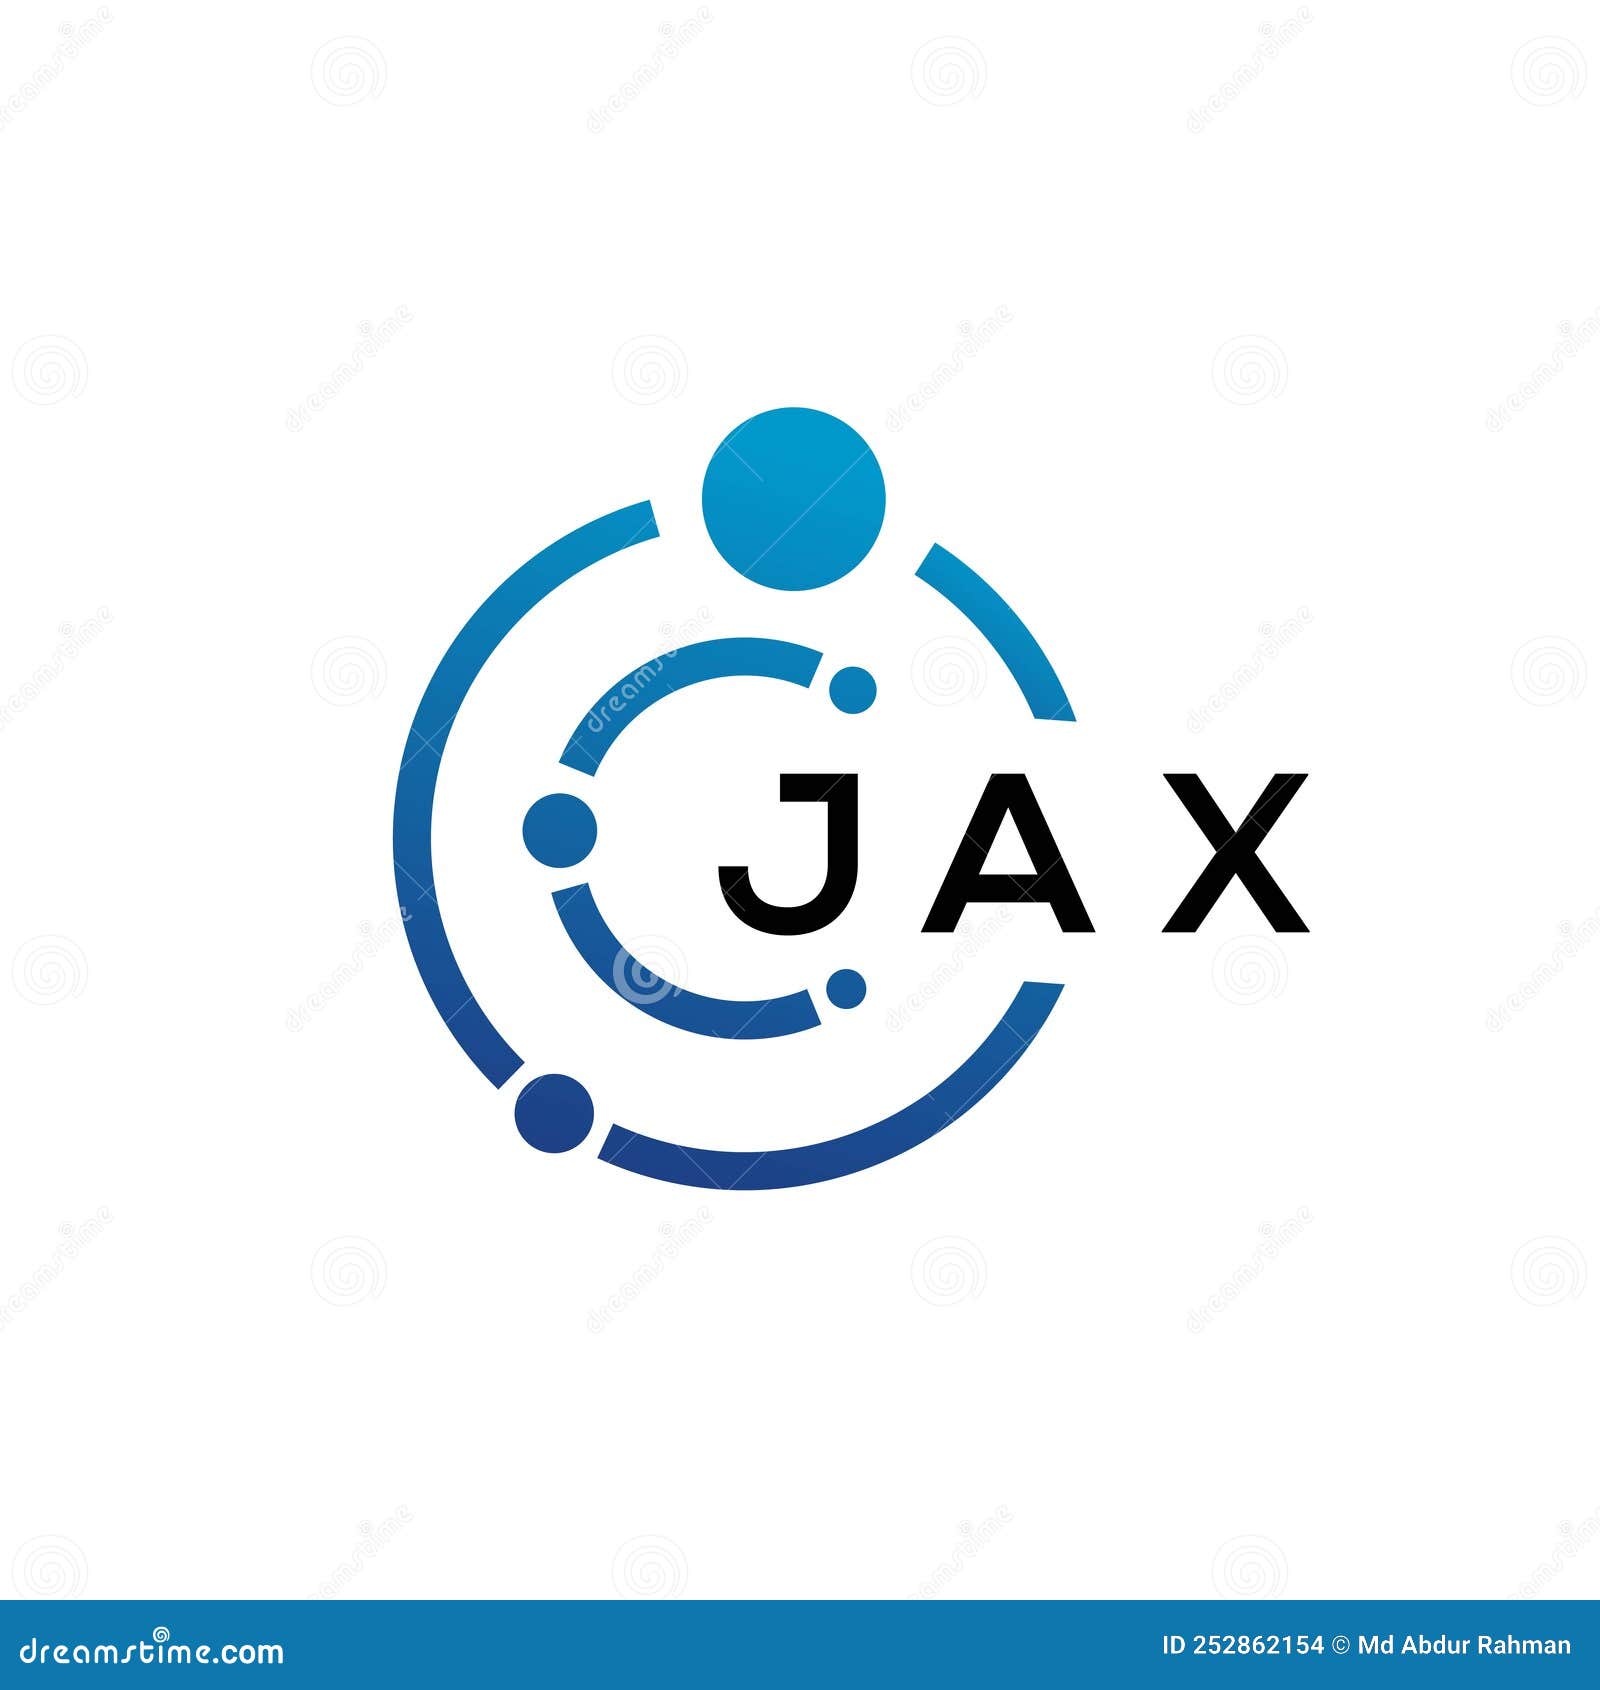 jax letter technology logo  on white background. jax creative initials letter it logo concept. jax letter 